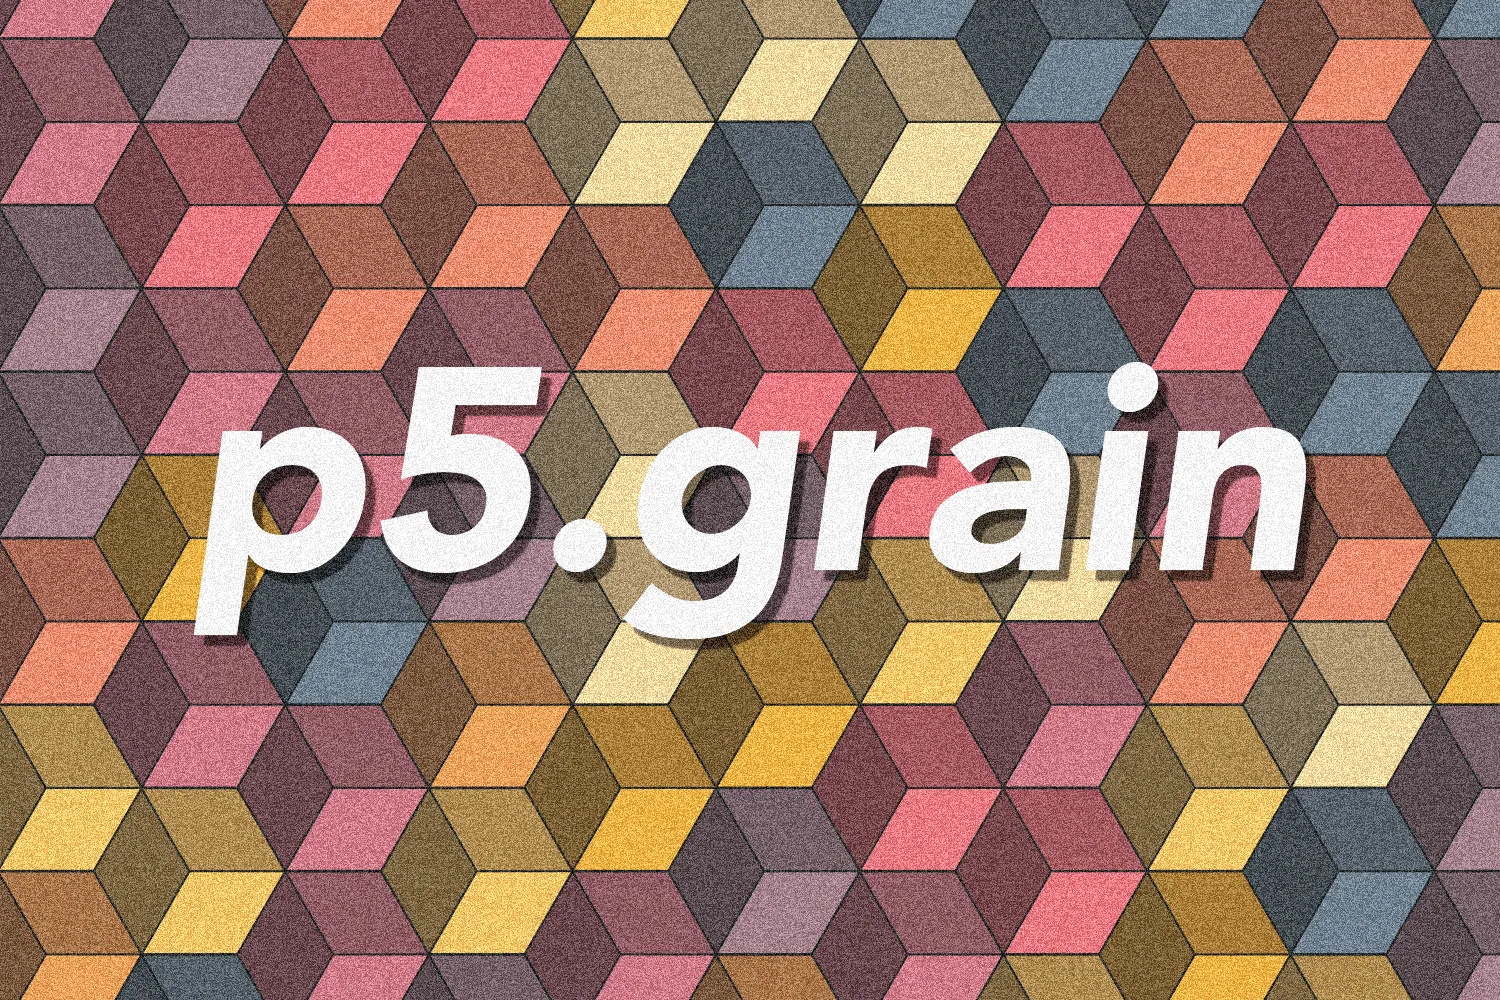 Colorful hexagonal cubes tessellation spelling "p5.grain"